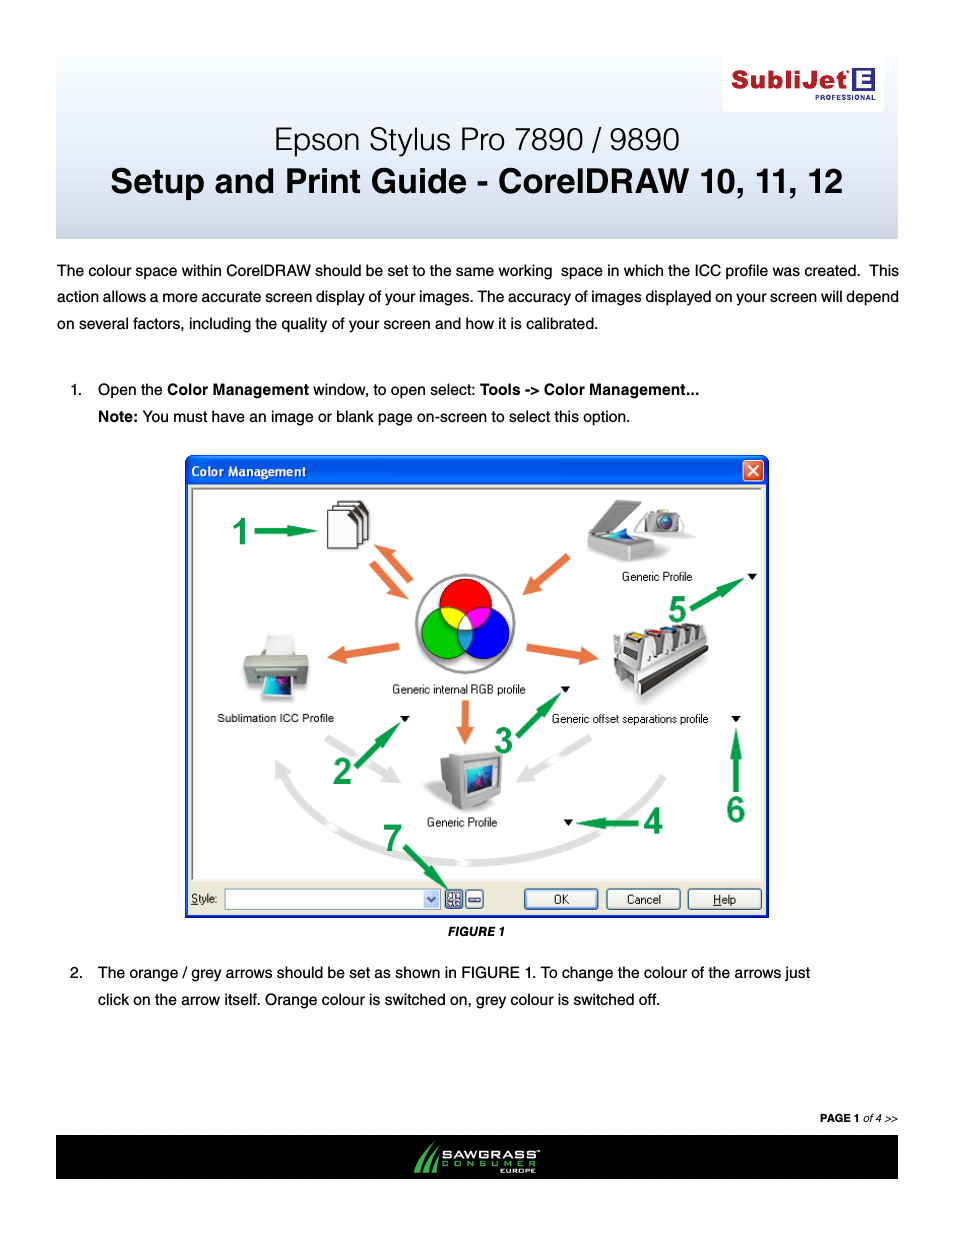 SubliJet E Epson Stylus Pro 9890 (Windows ICC Profile Setup): Print & Setup Guide CorelDRAW 10 - 12